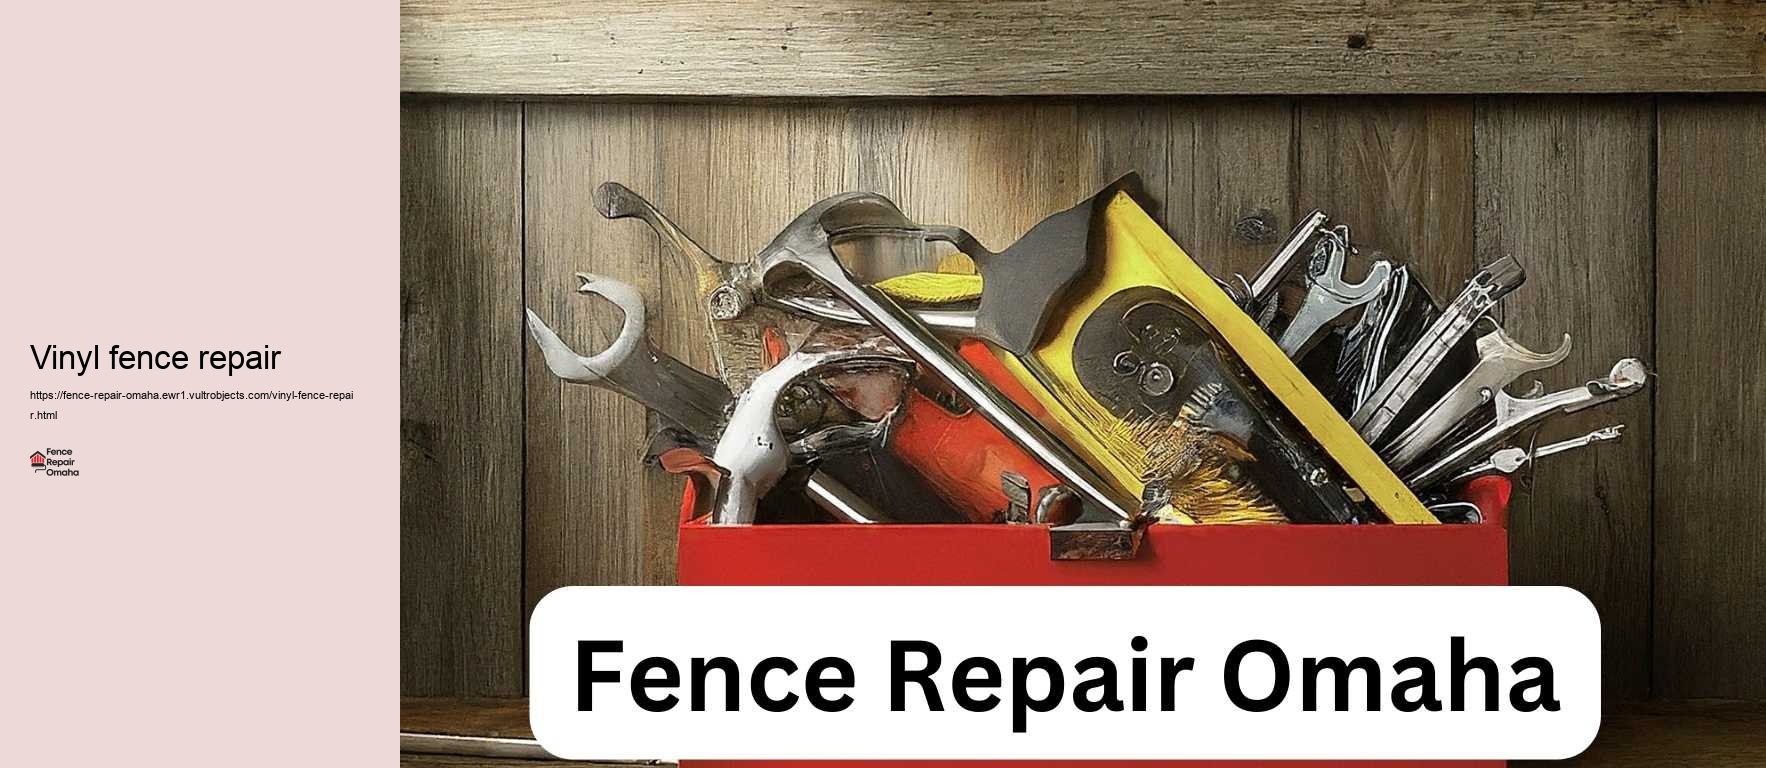 Vinyl fence repair